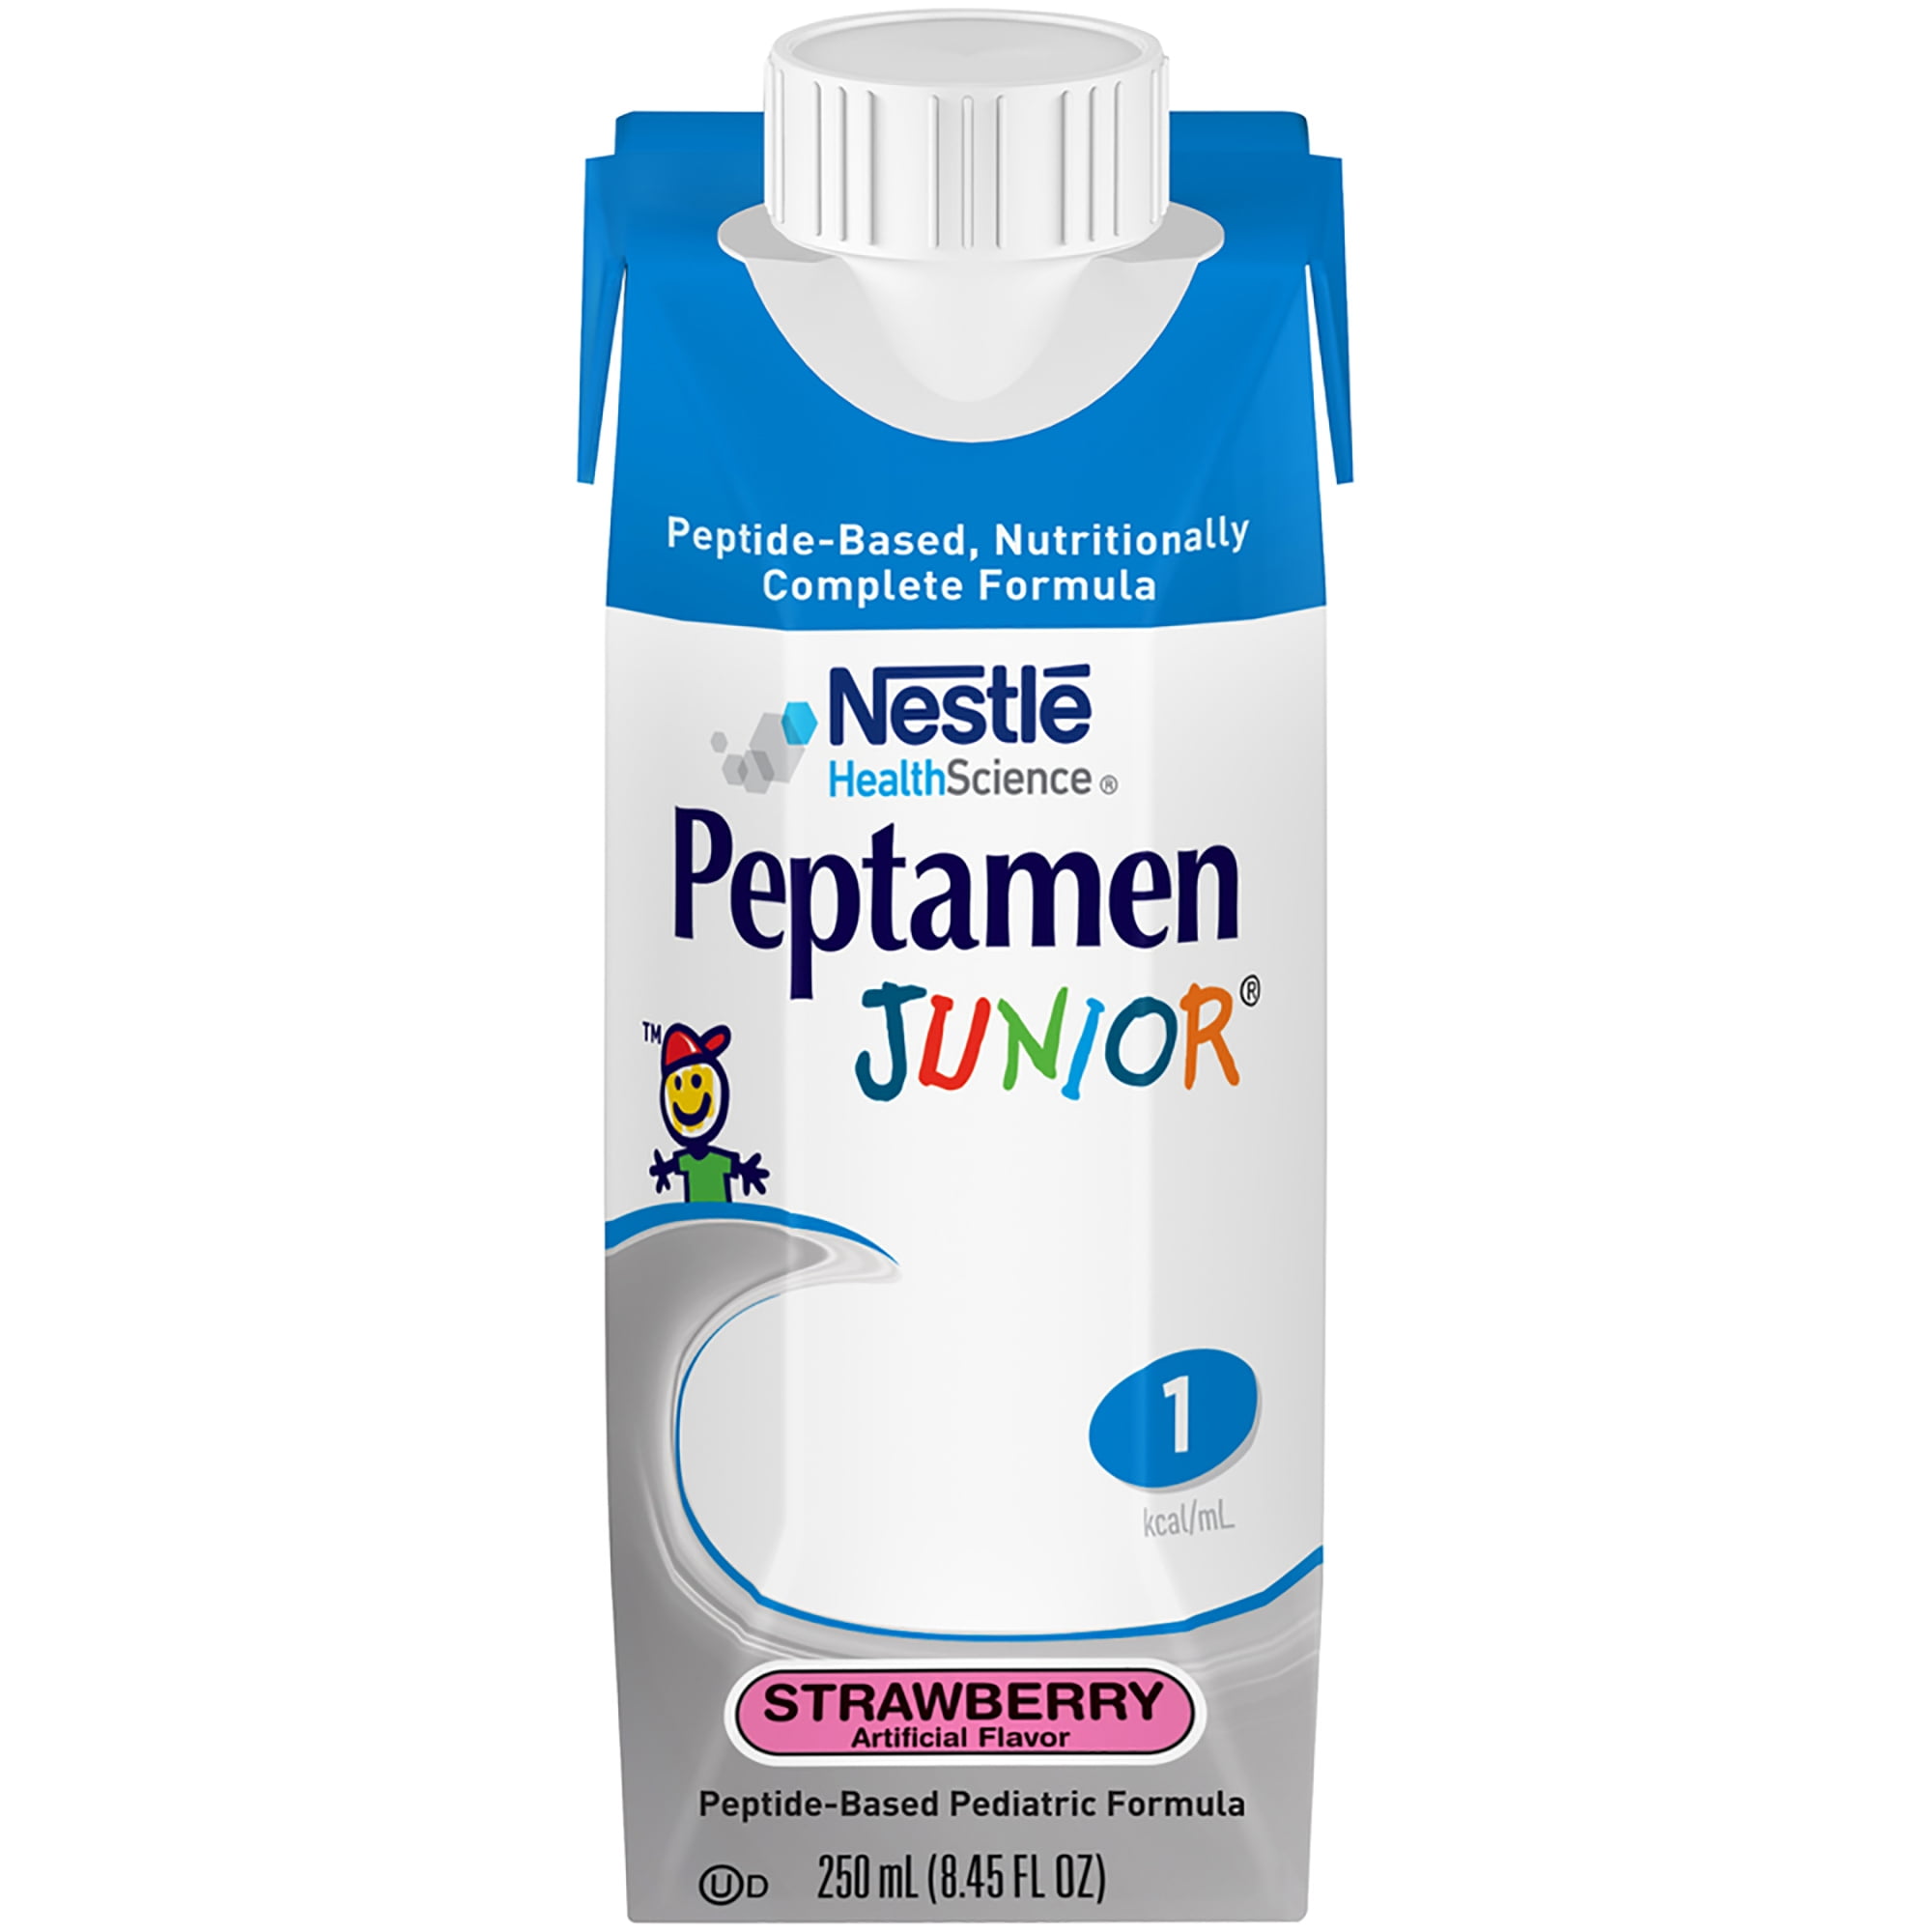 Nestle Peptamen Jr. Peptide-Based Complete Nutrition Strawberry 8.45 oz